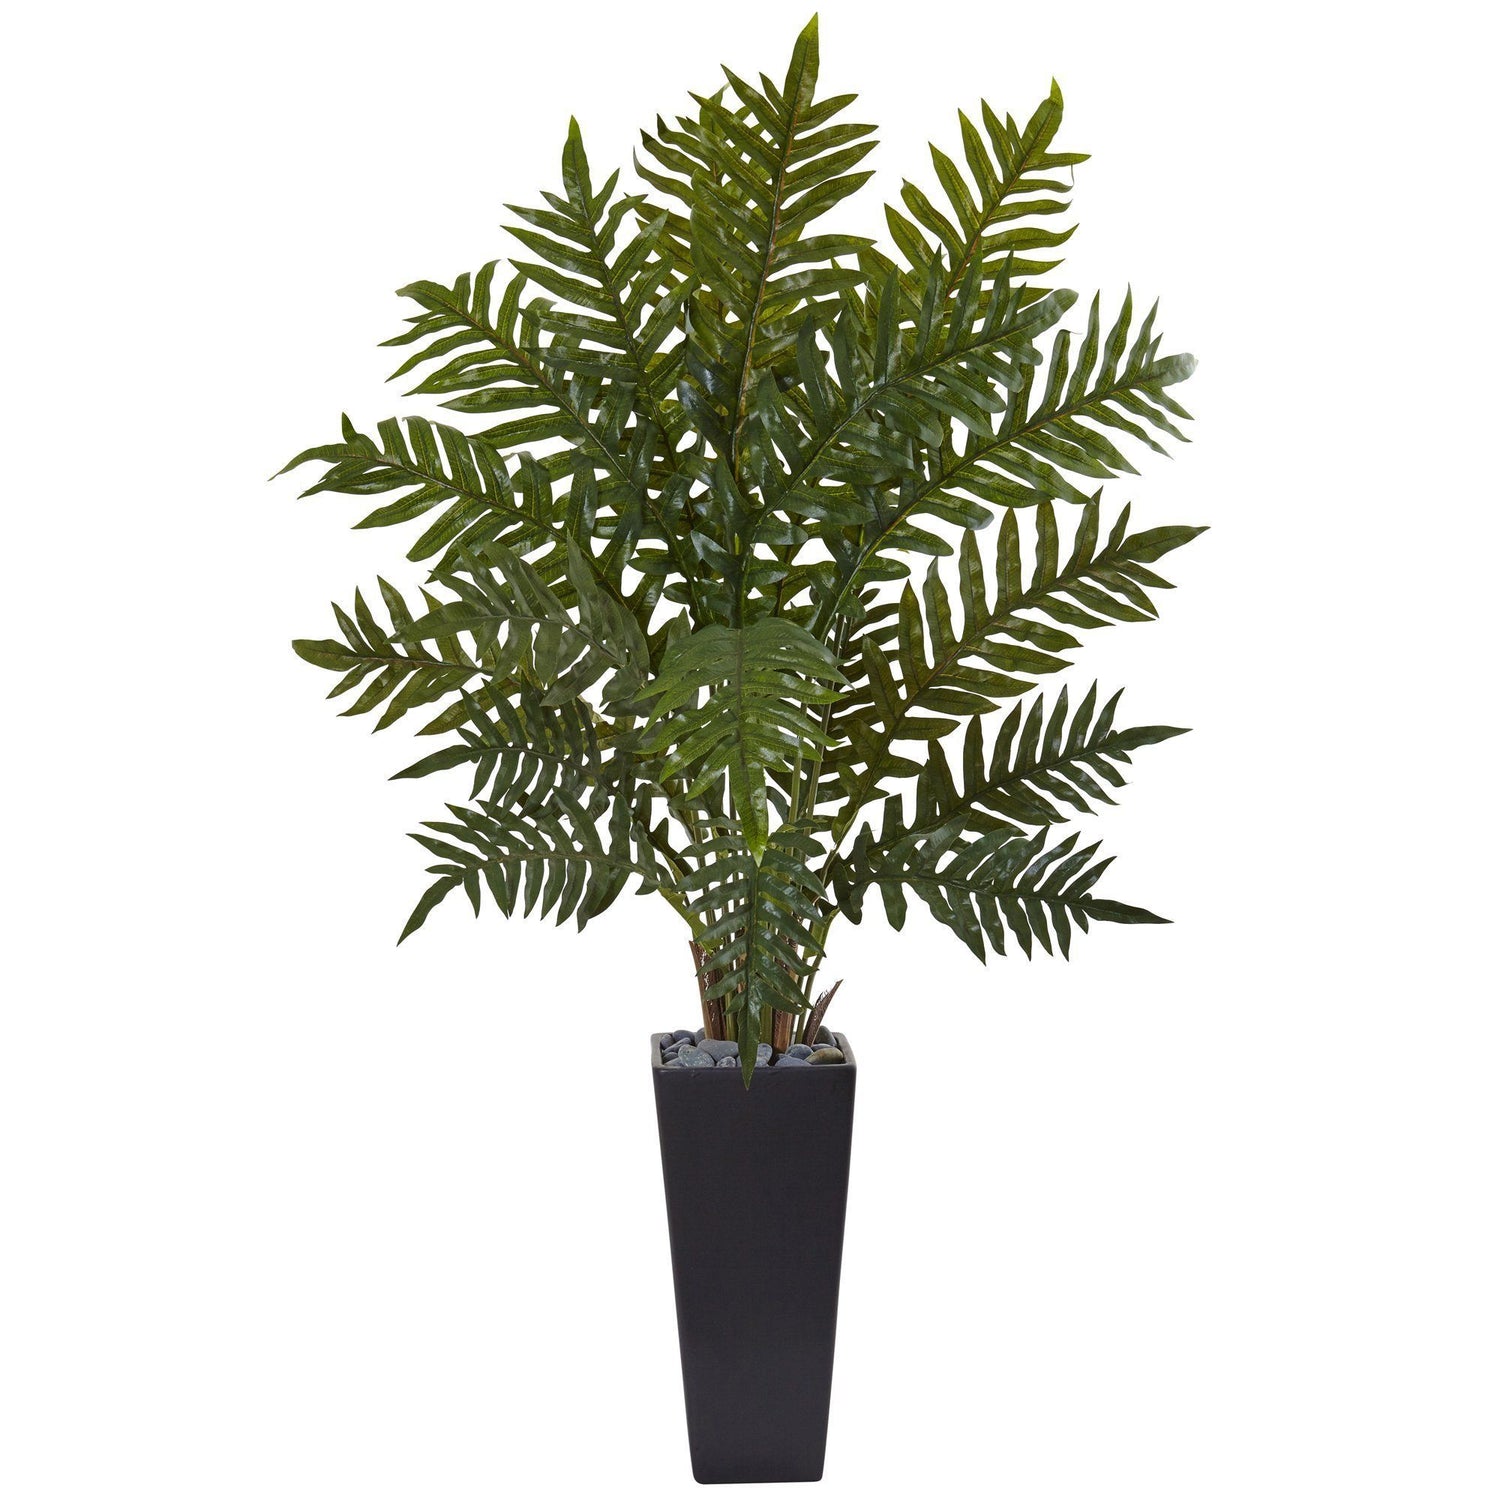 4.5’ Evergreen Plant in Black Planter